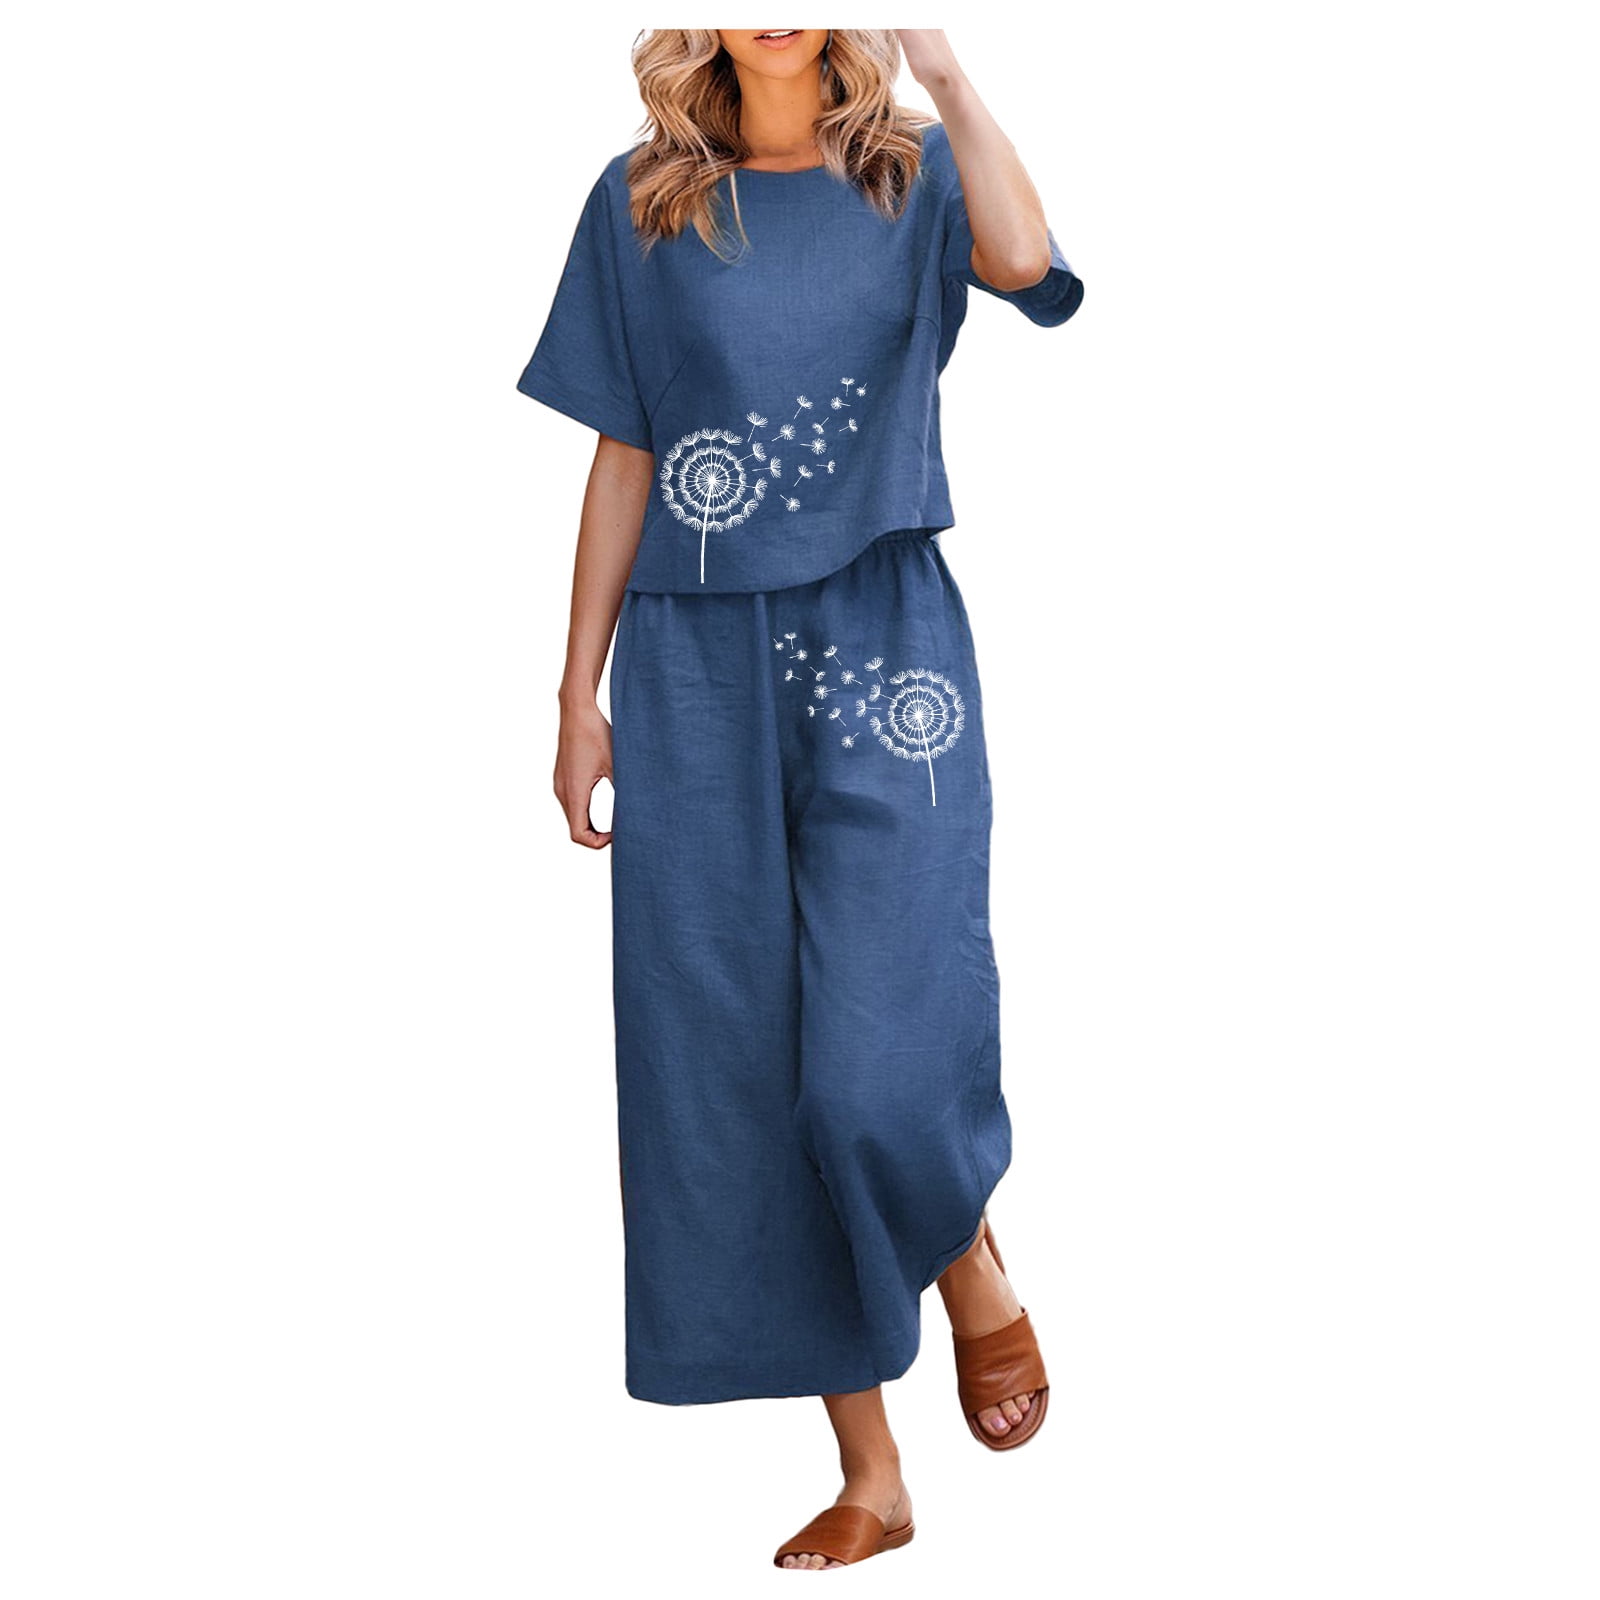 Mlqidk Two Piece Cotton Linen Outfits for Women Cotton Linen Sets Short ...